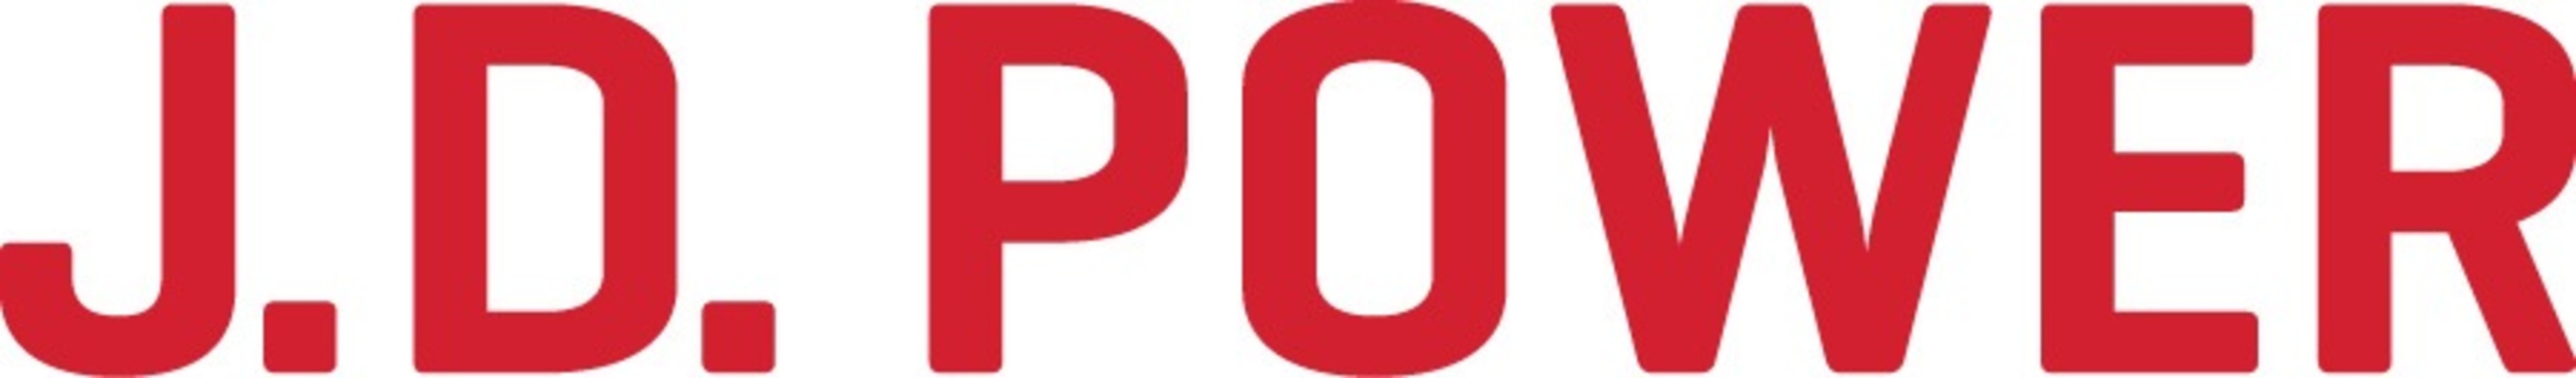 J.D. Power corporate logo.